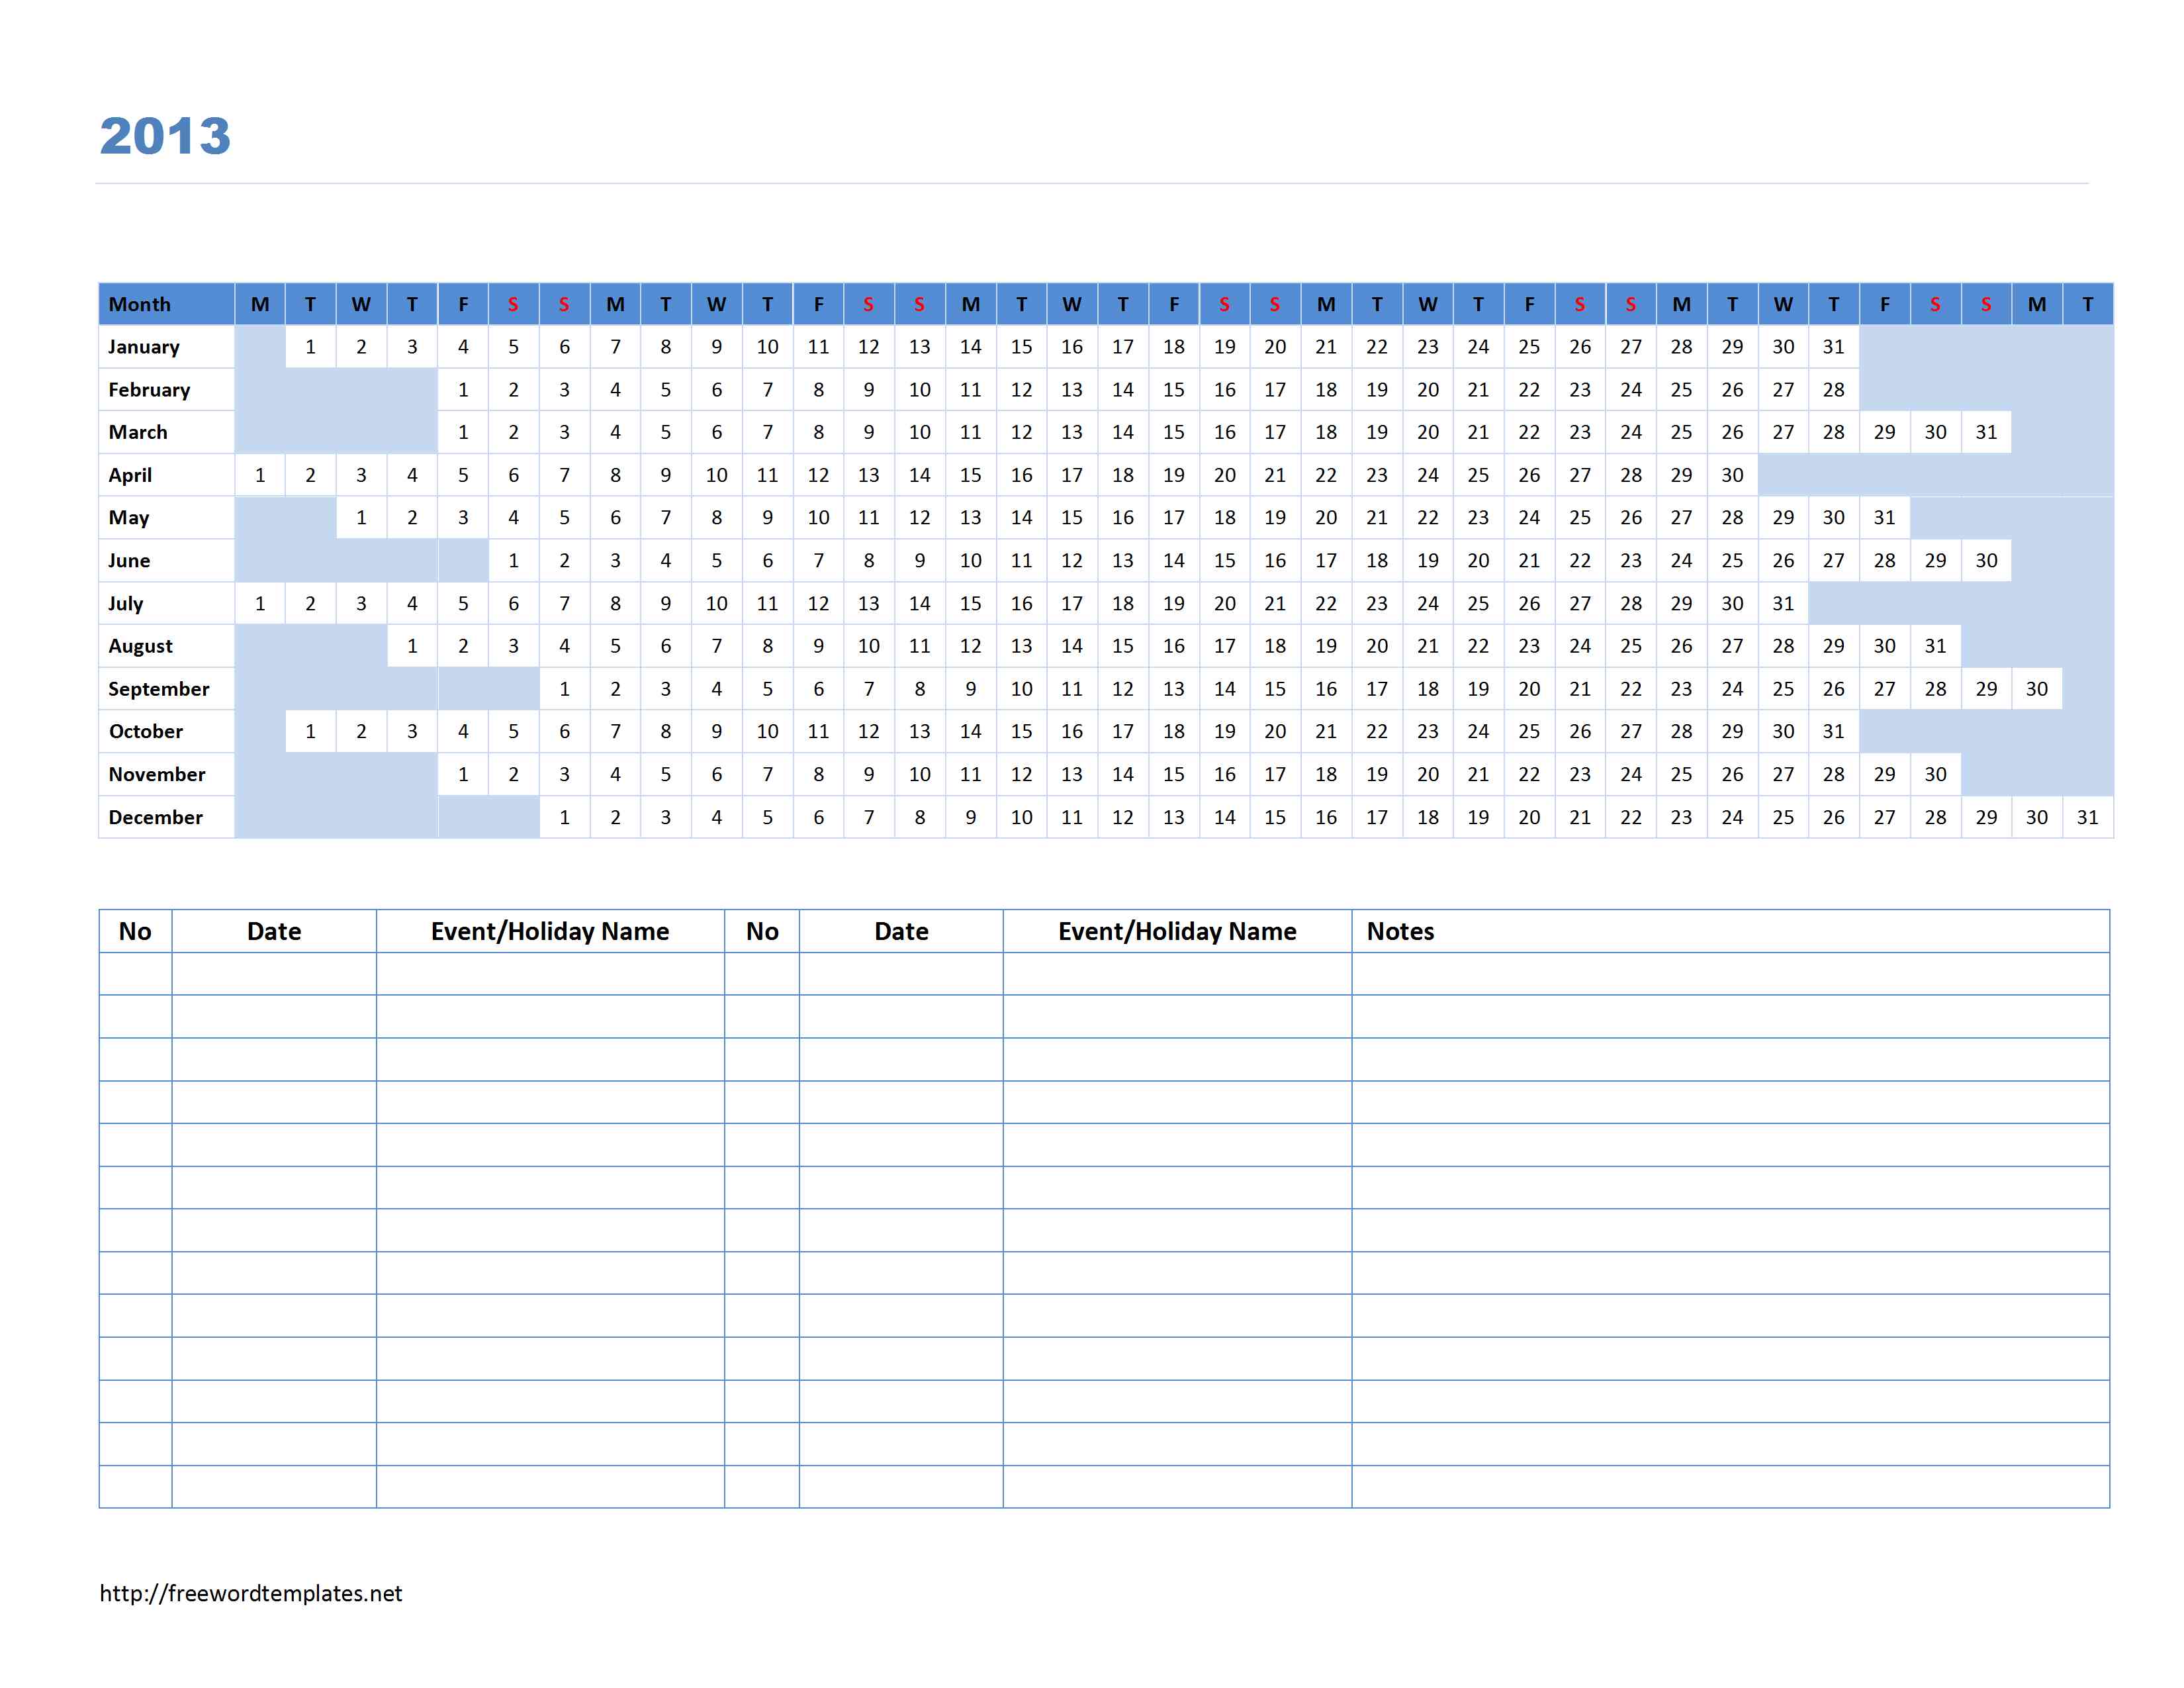 2013 Linear Calendar Template for Microsoft Word